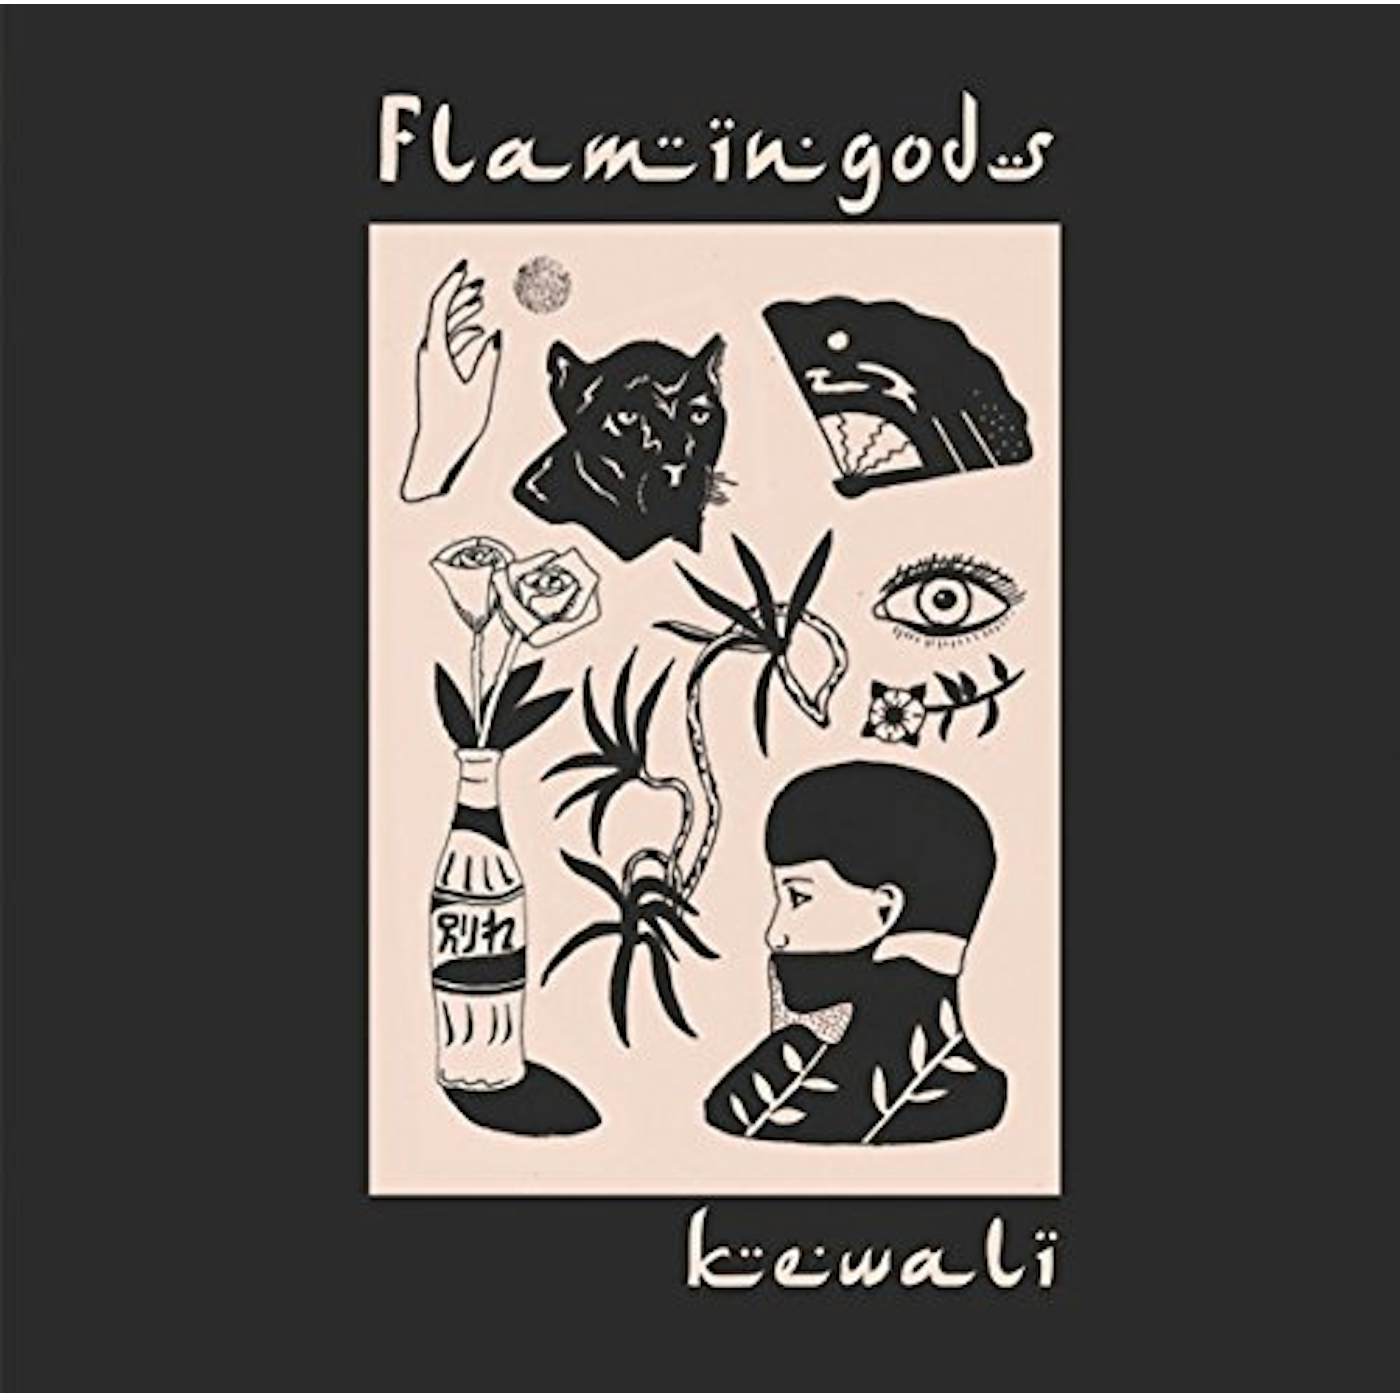 Flamingods KAWEIL Vinyl Record